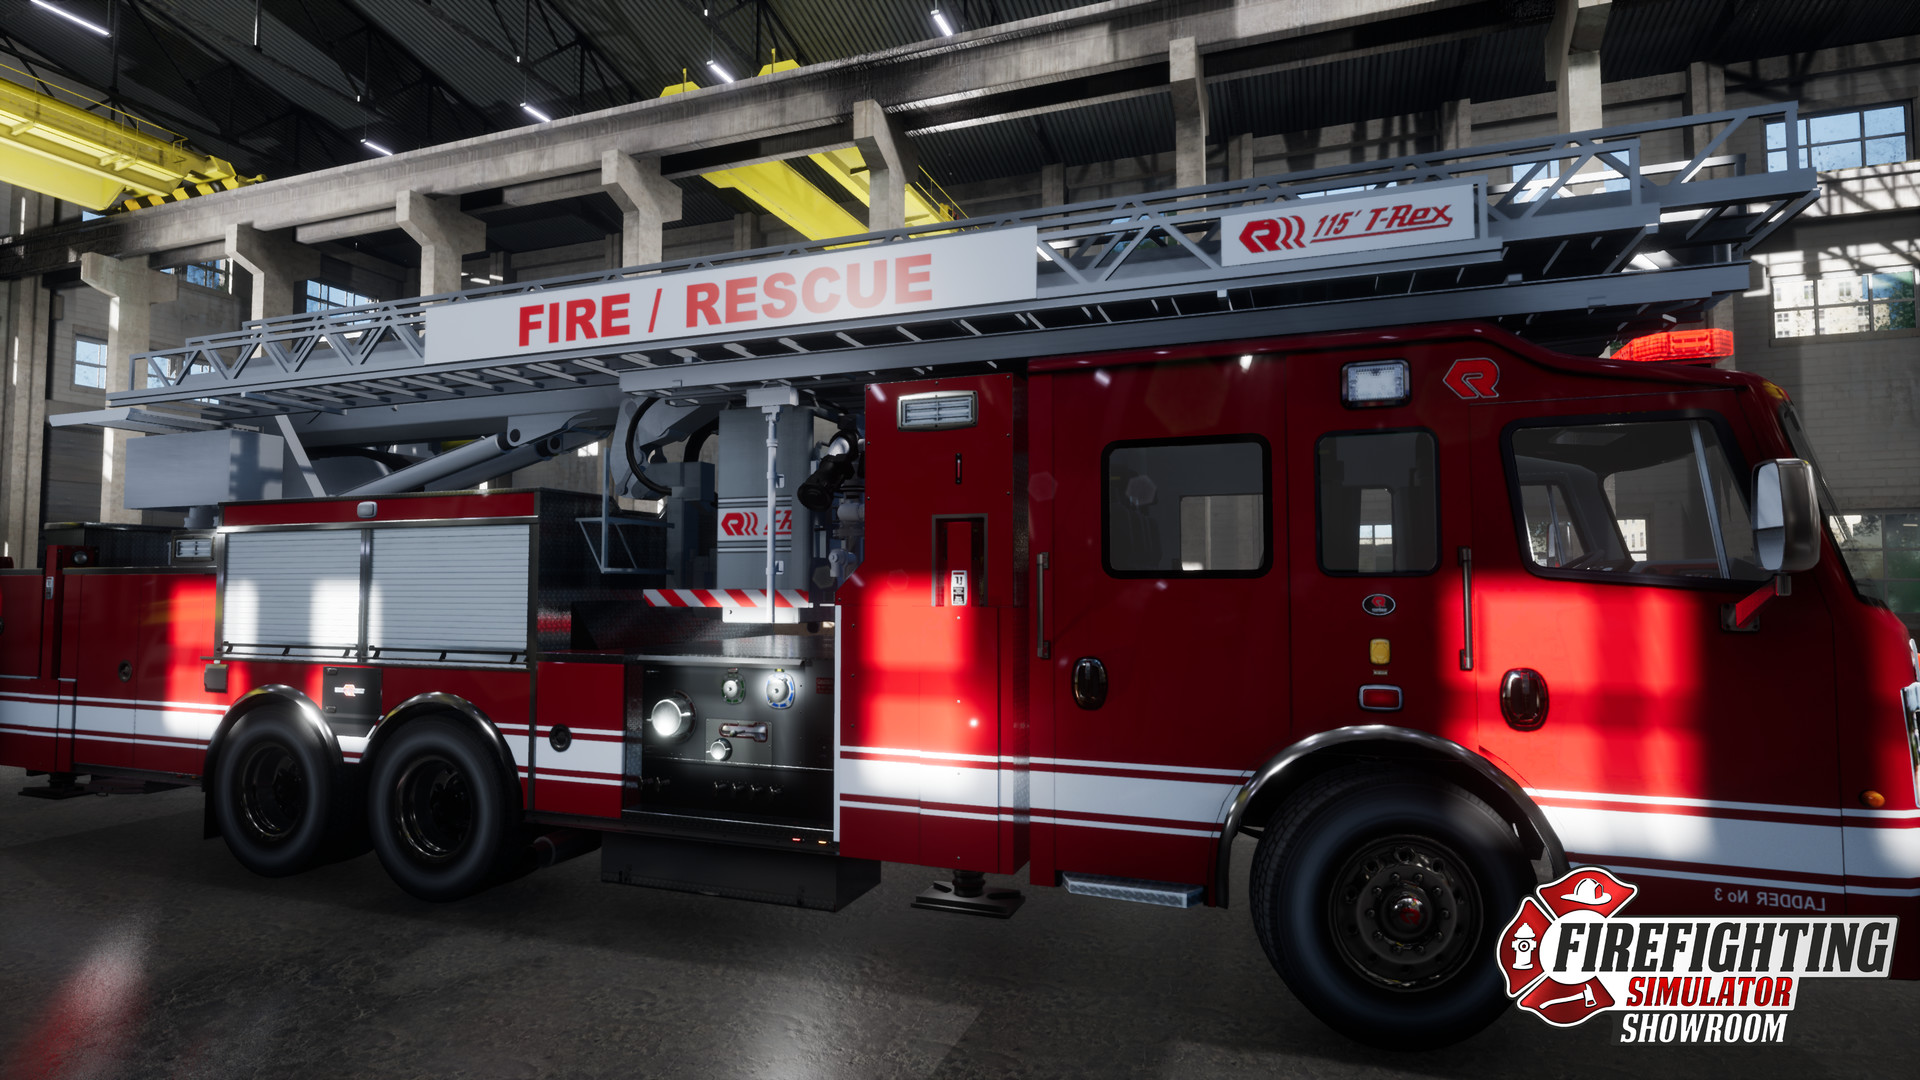 Firefighting Simulator On Steam